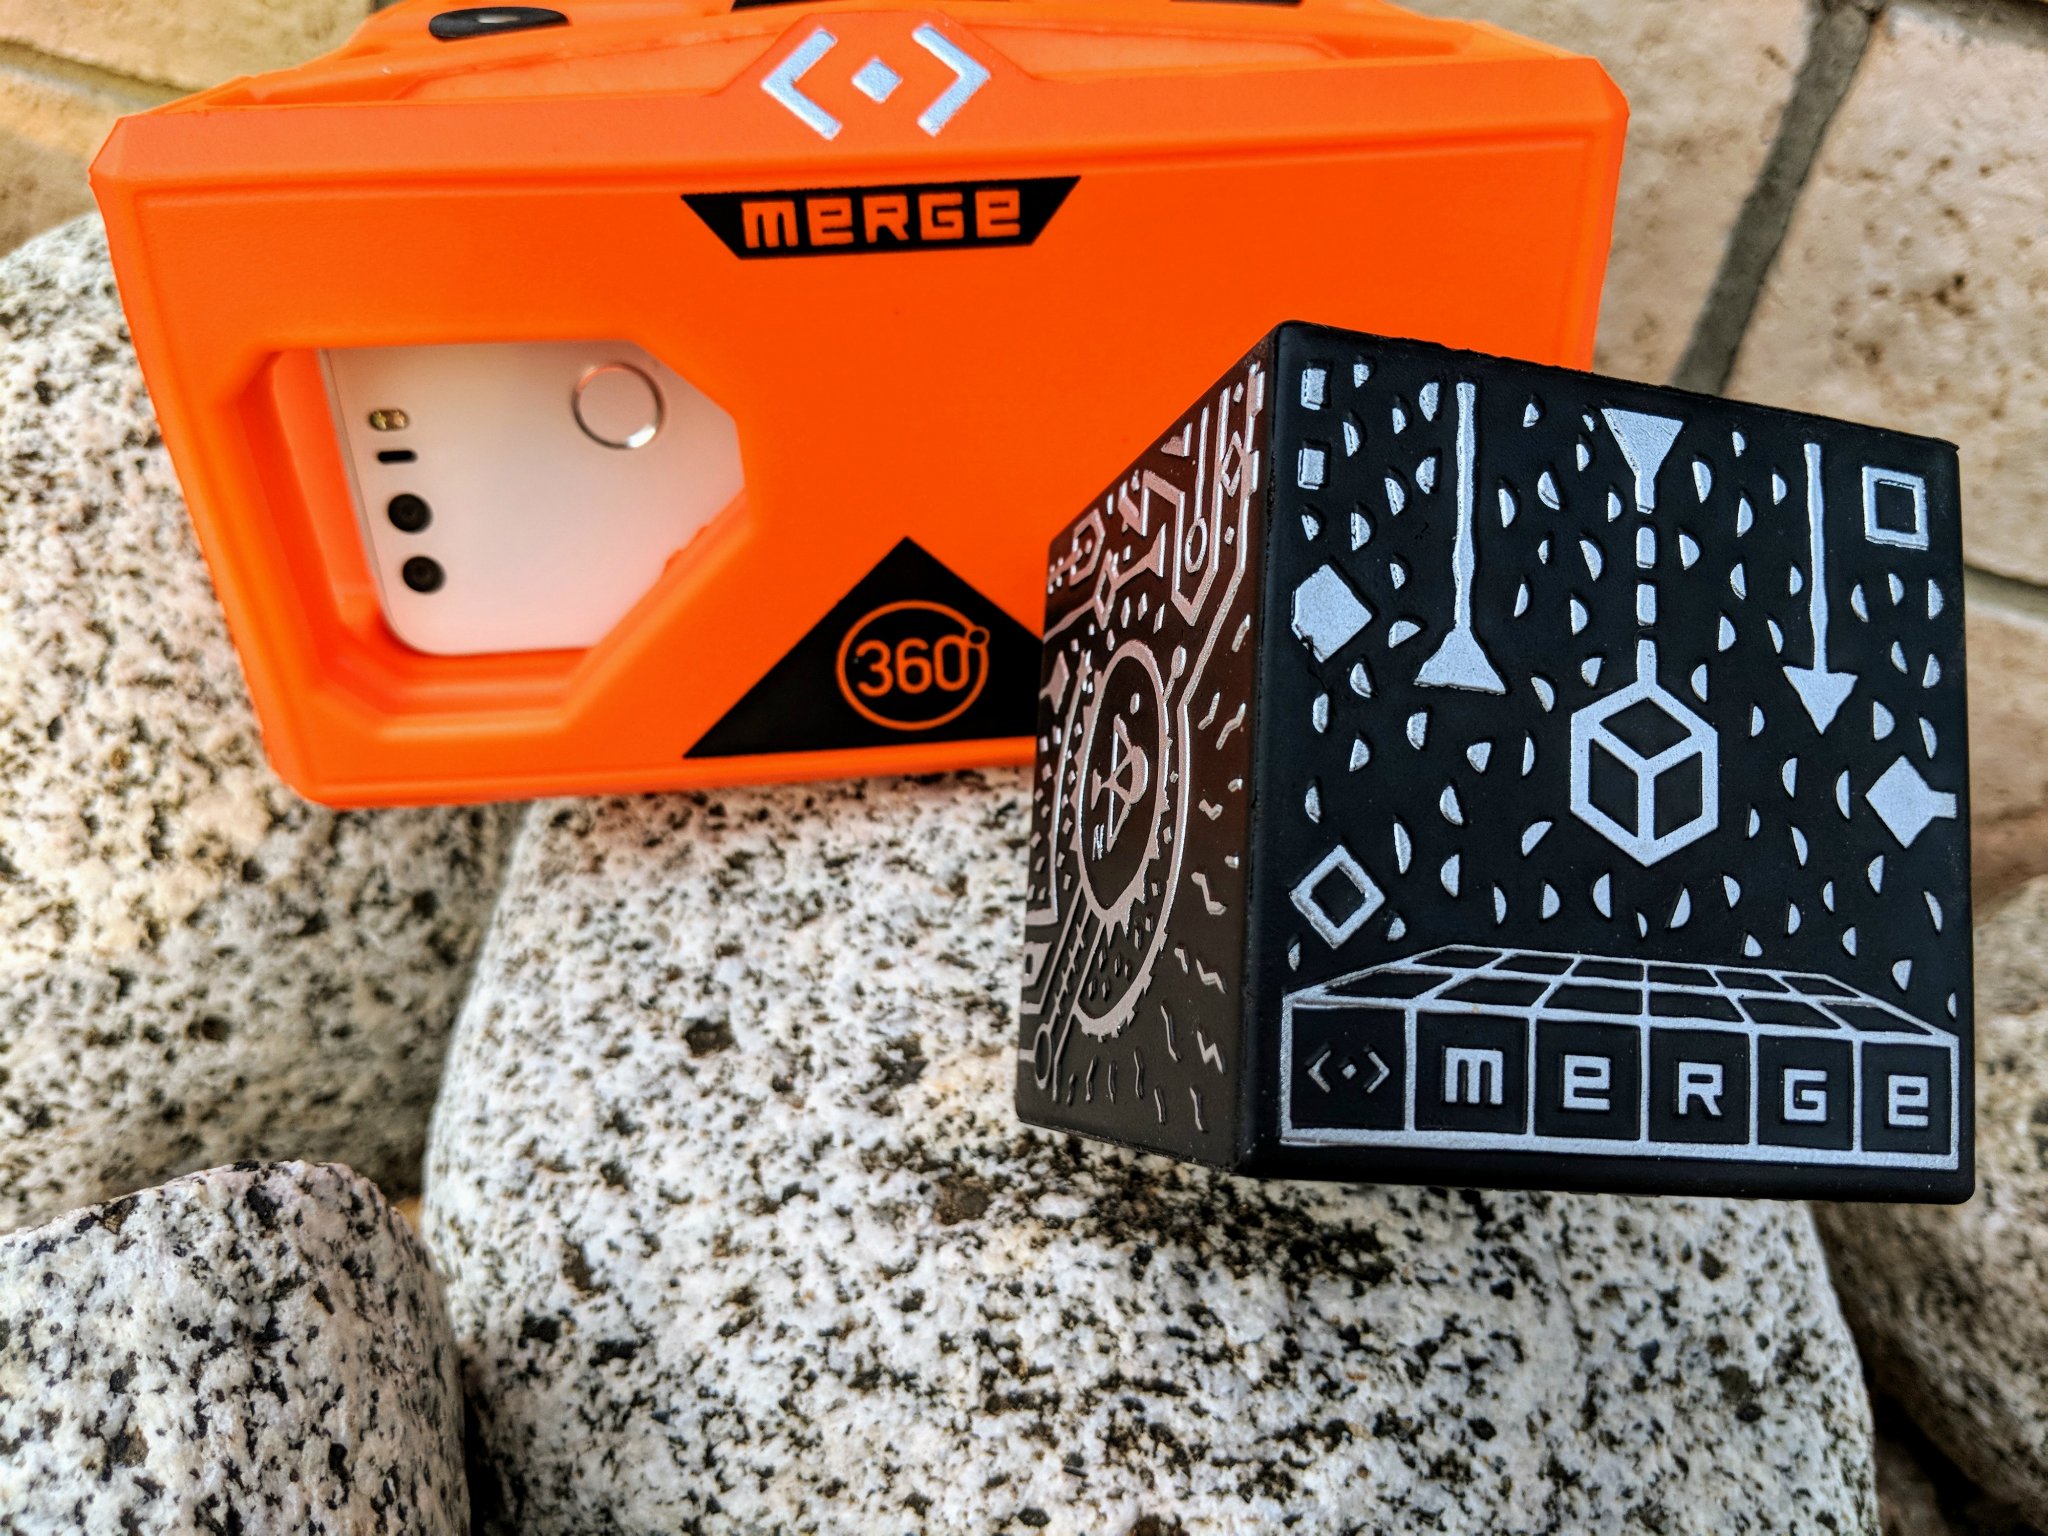 Buy the Merge Cube, VR Expert, VR & AR